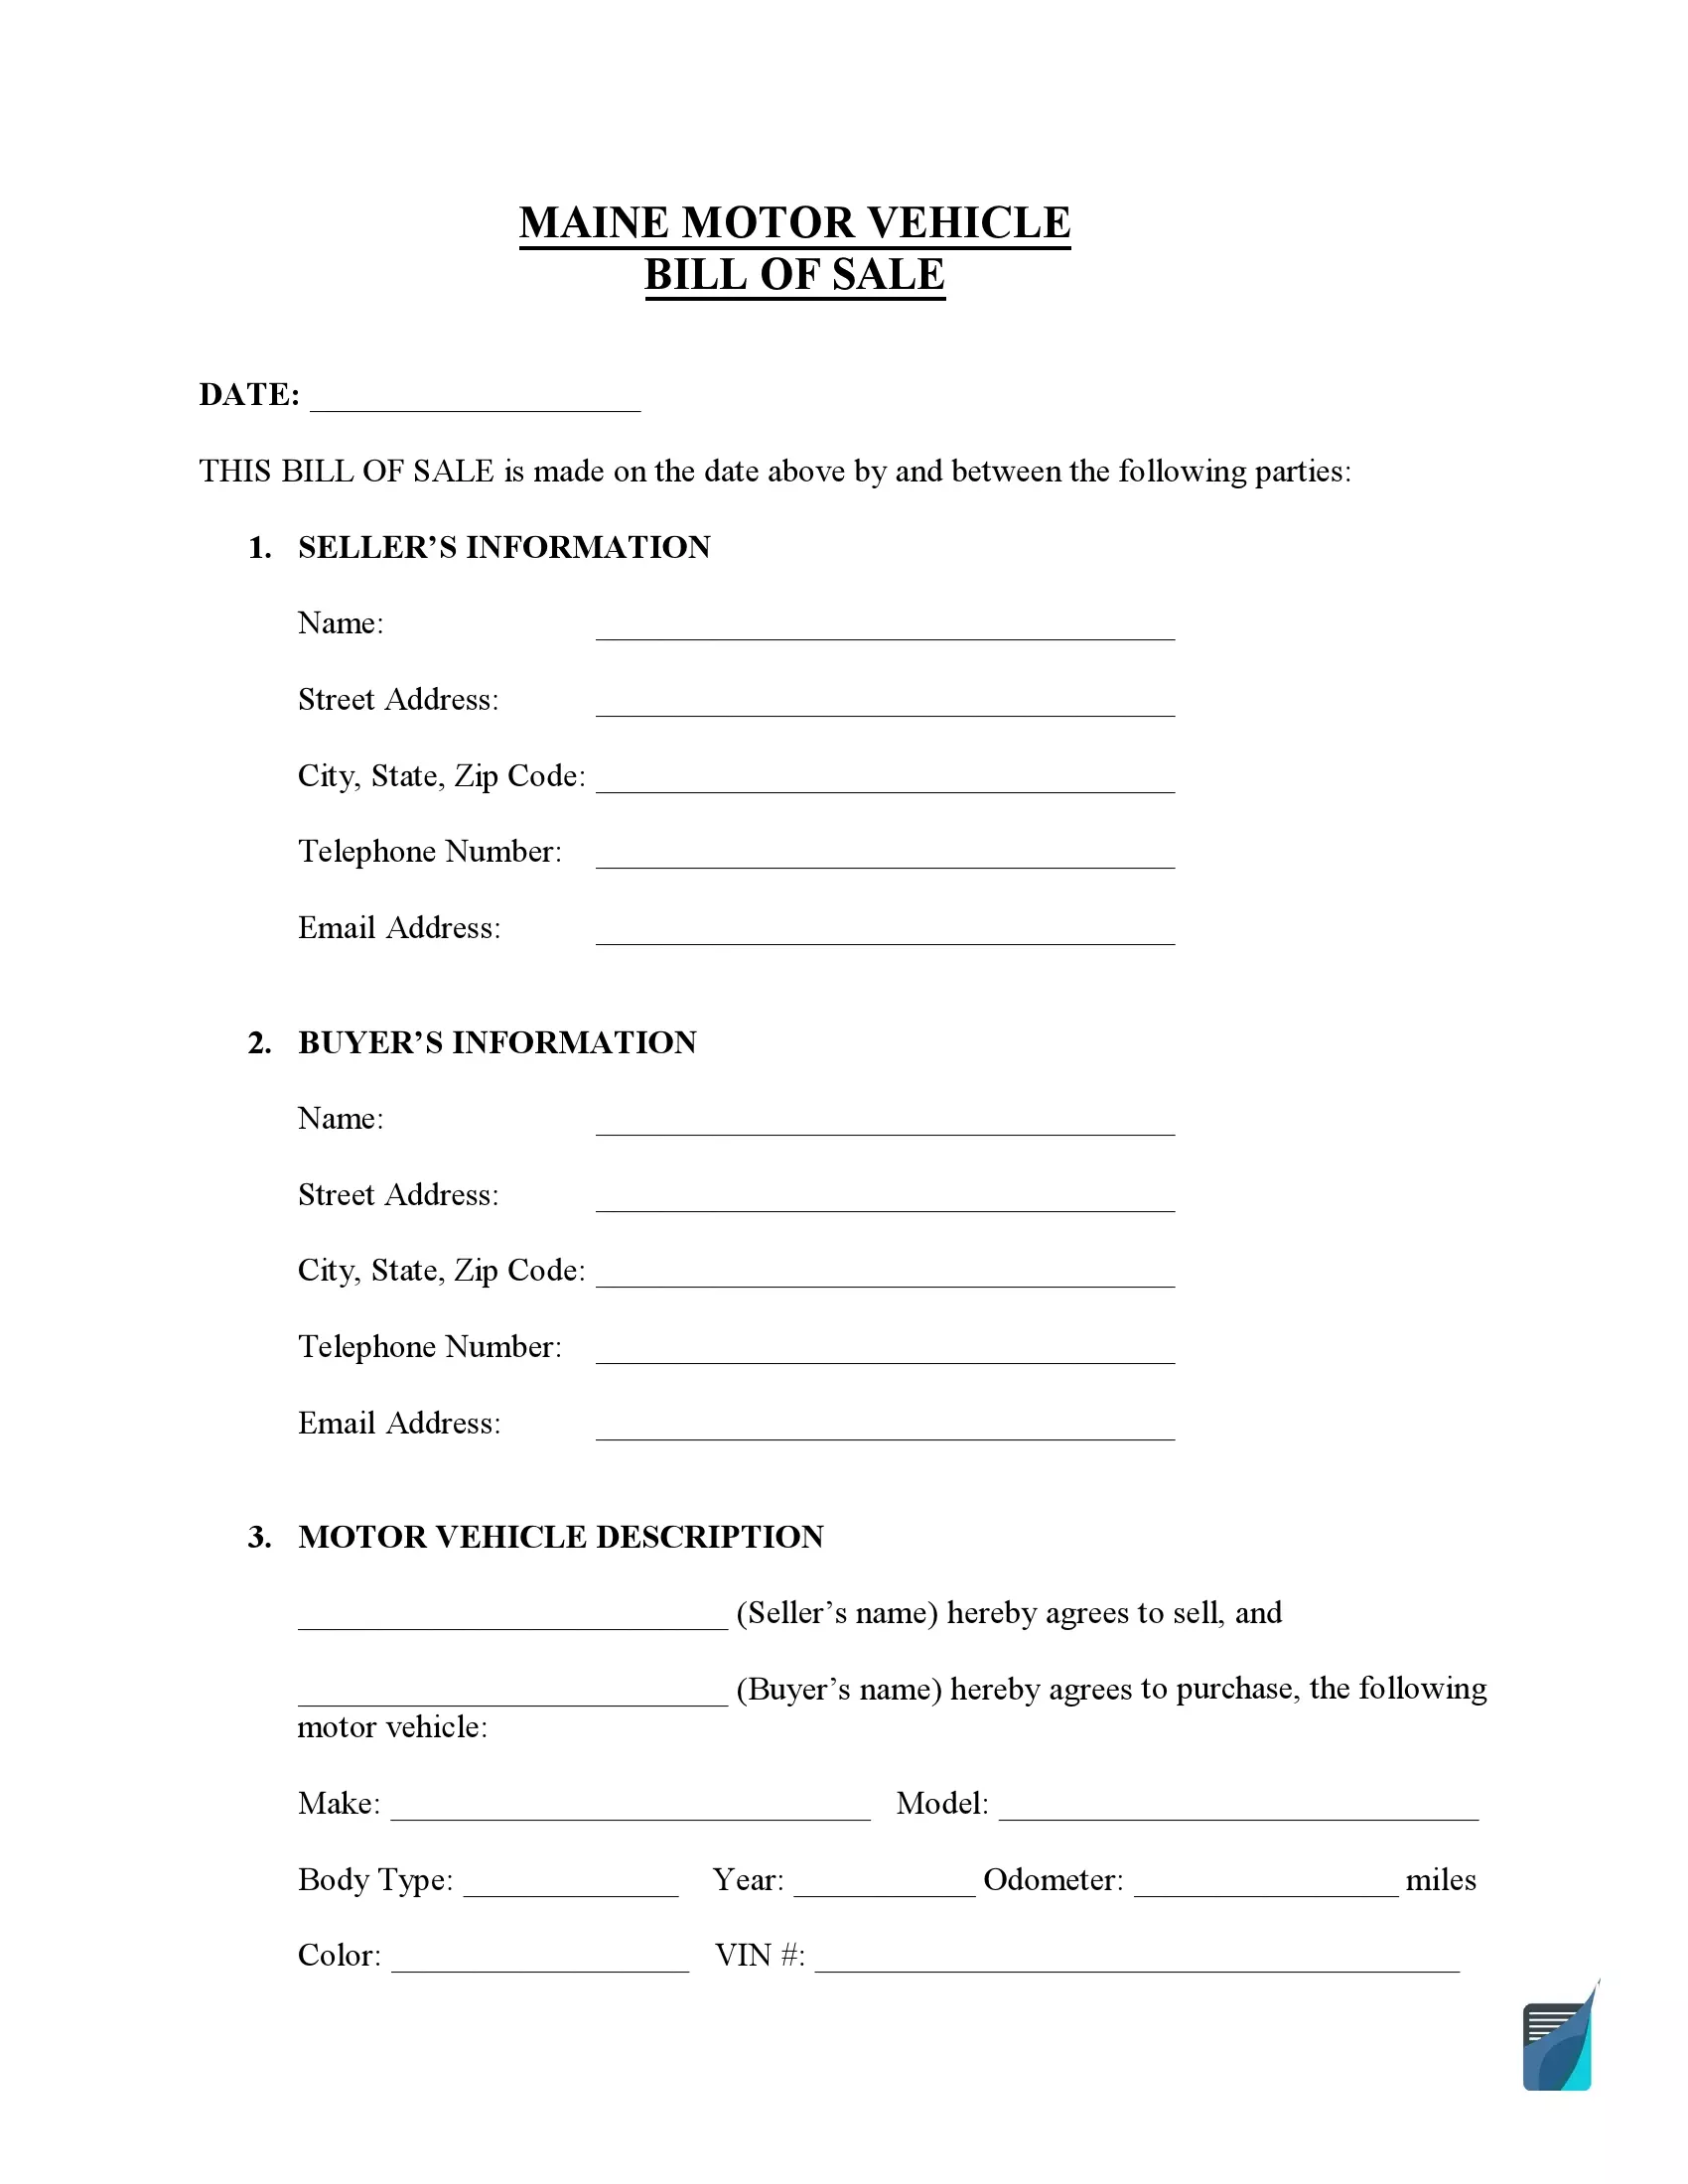 Maine motor vehicle bill of sale template